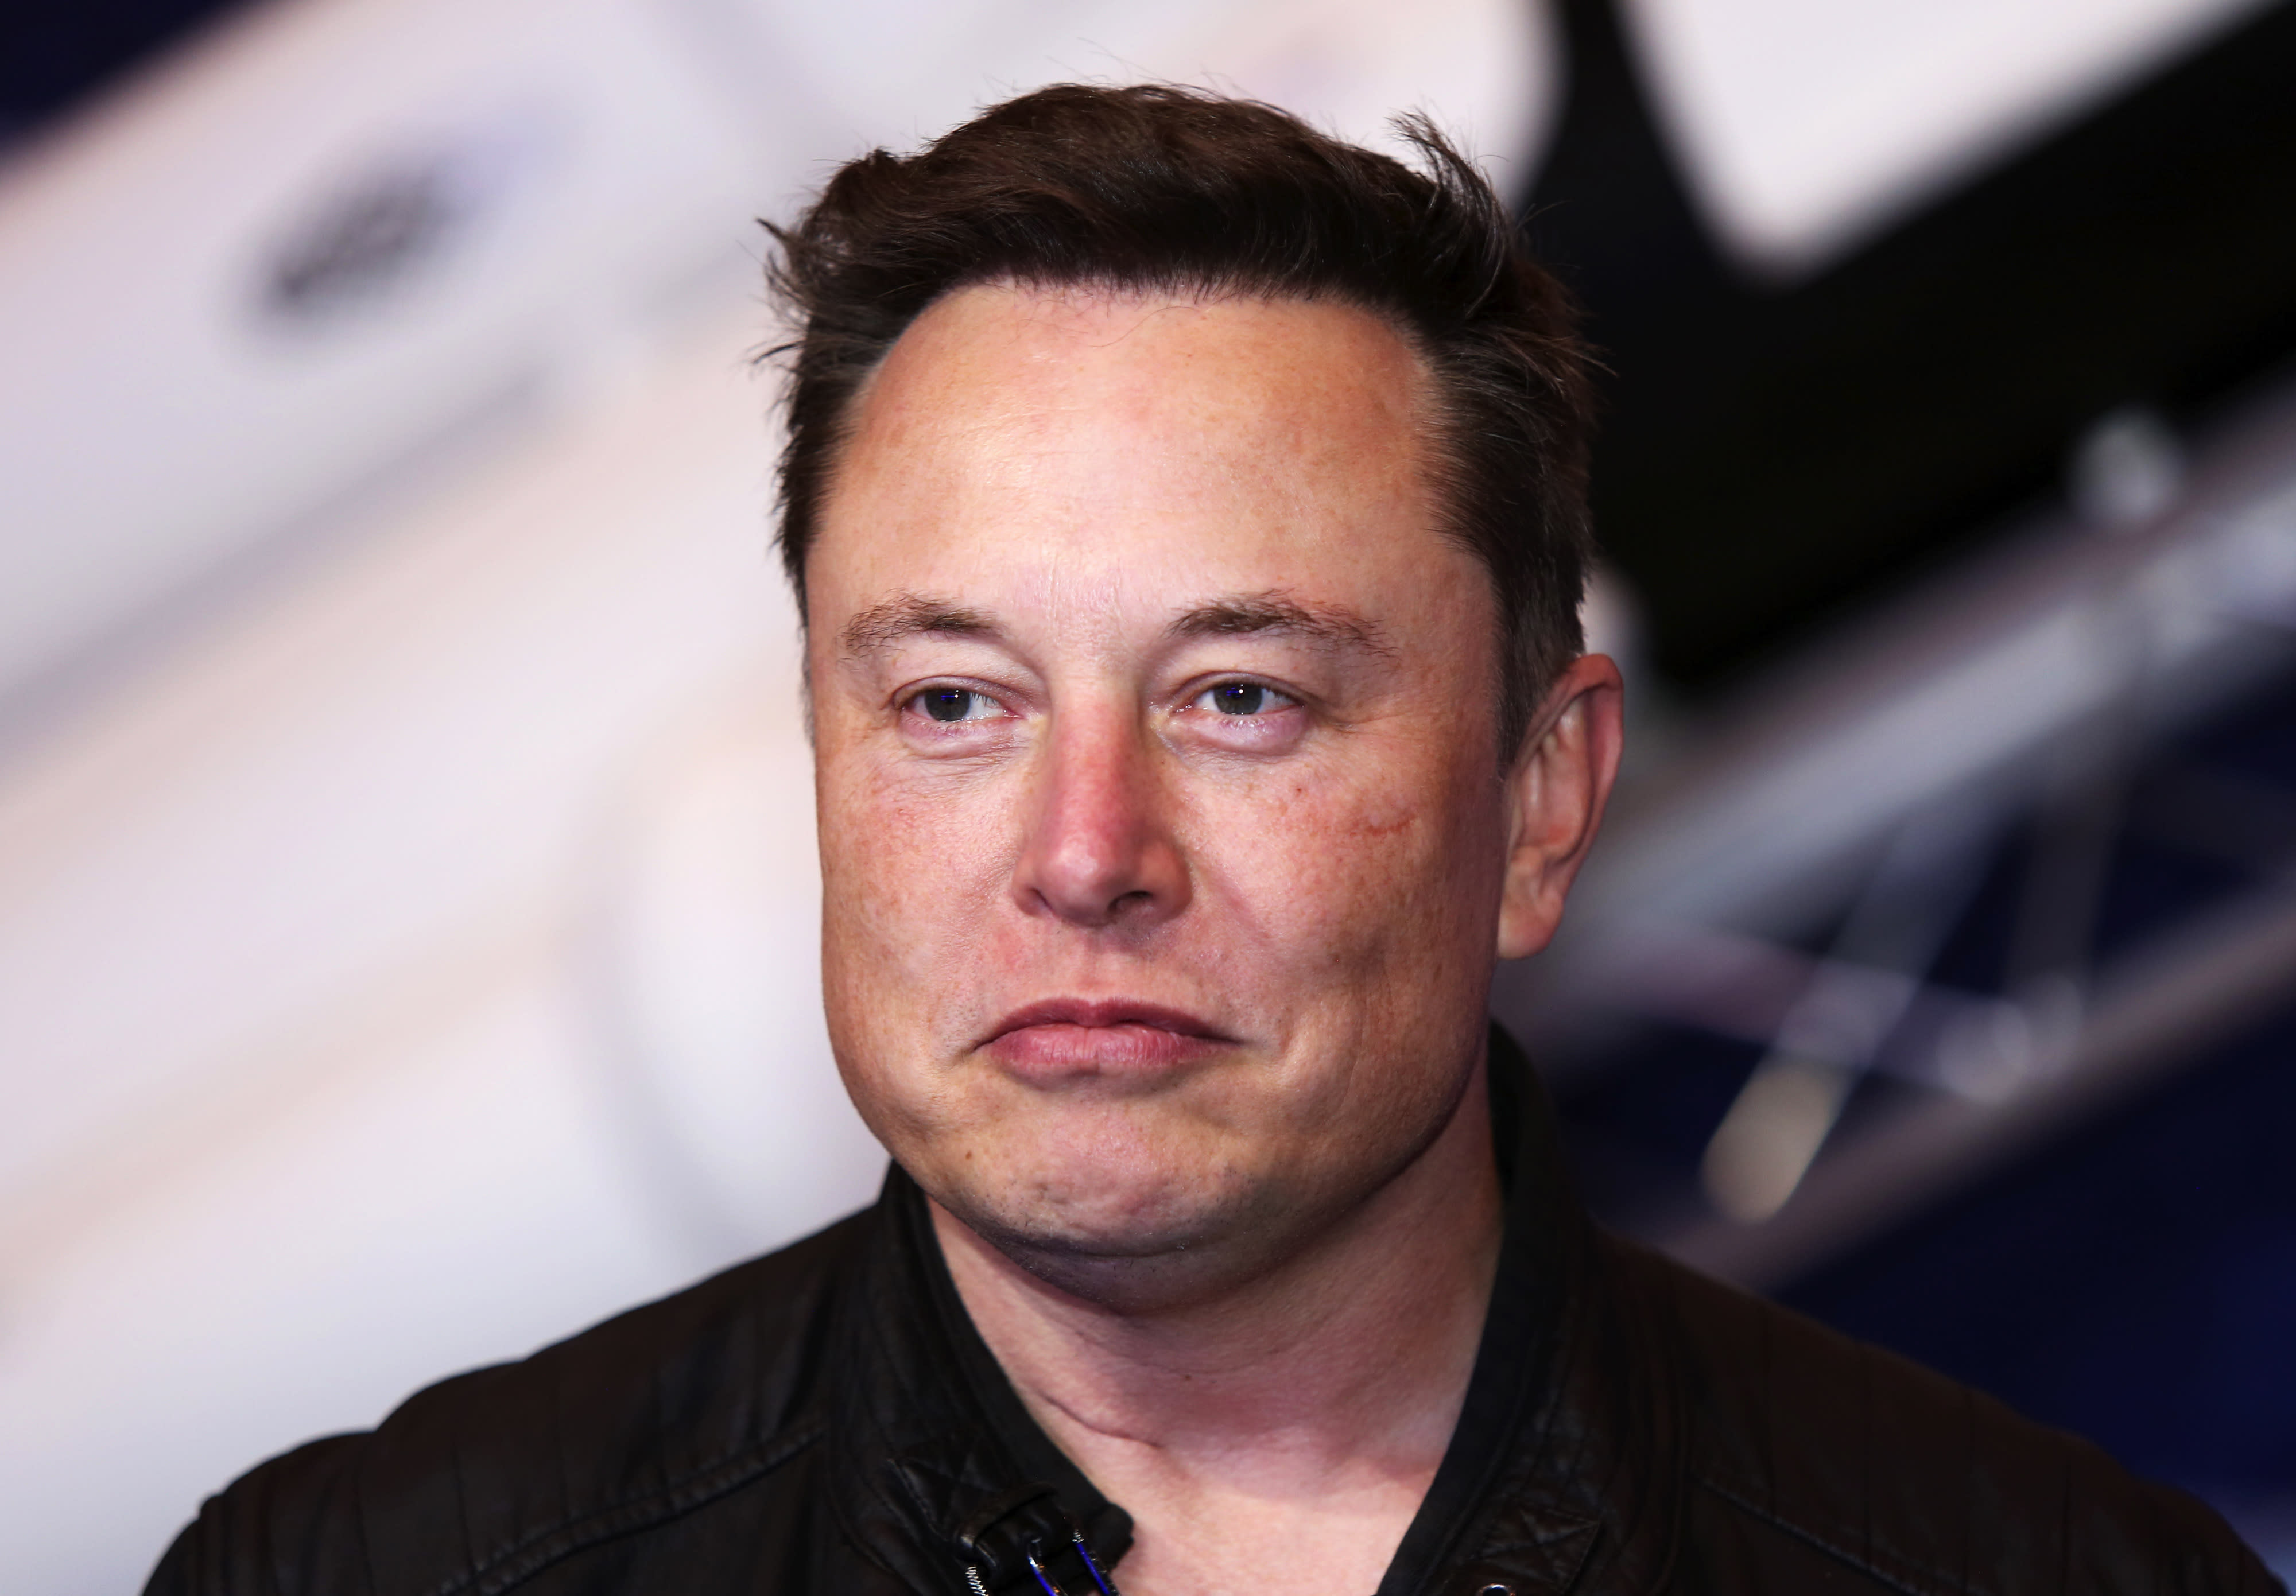 Elon Musk Should Apologize For Mocking Gender Pronouns Says Hrc